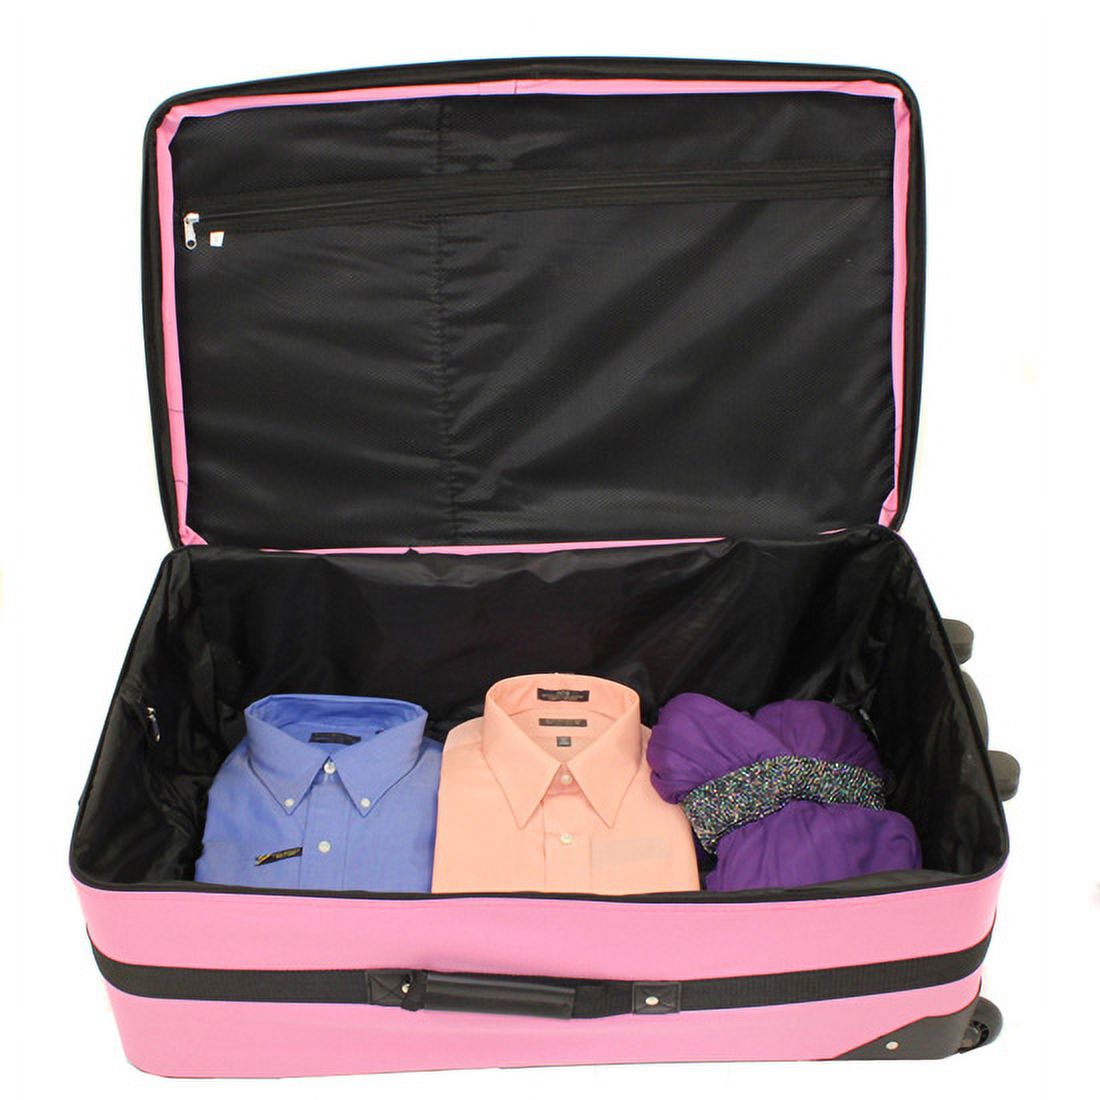 Rockland Luggage Fashion Collection 4 Piece Softside Expandable Luggage Set - image 5 of 5